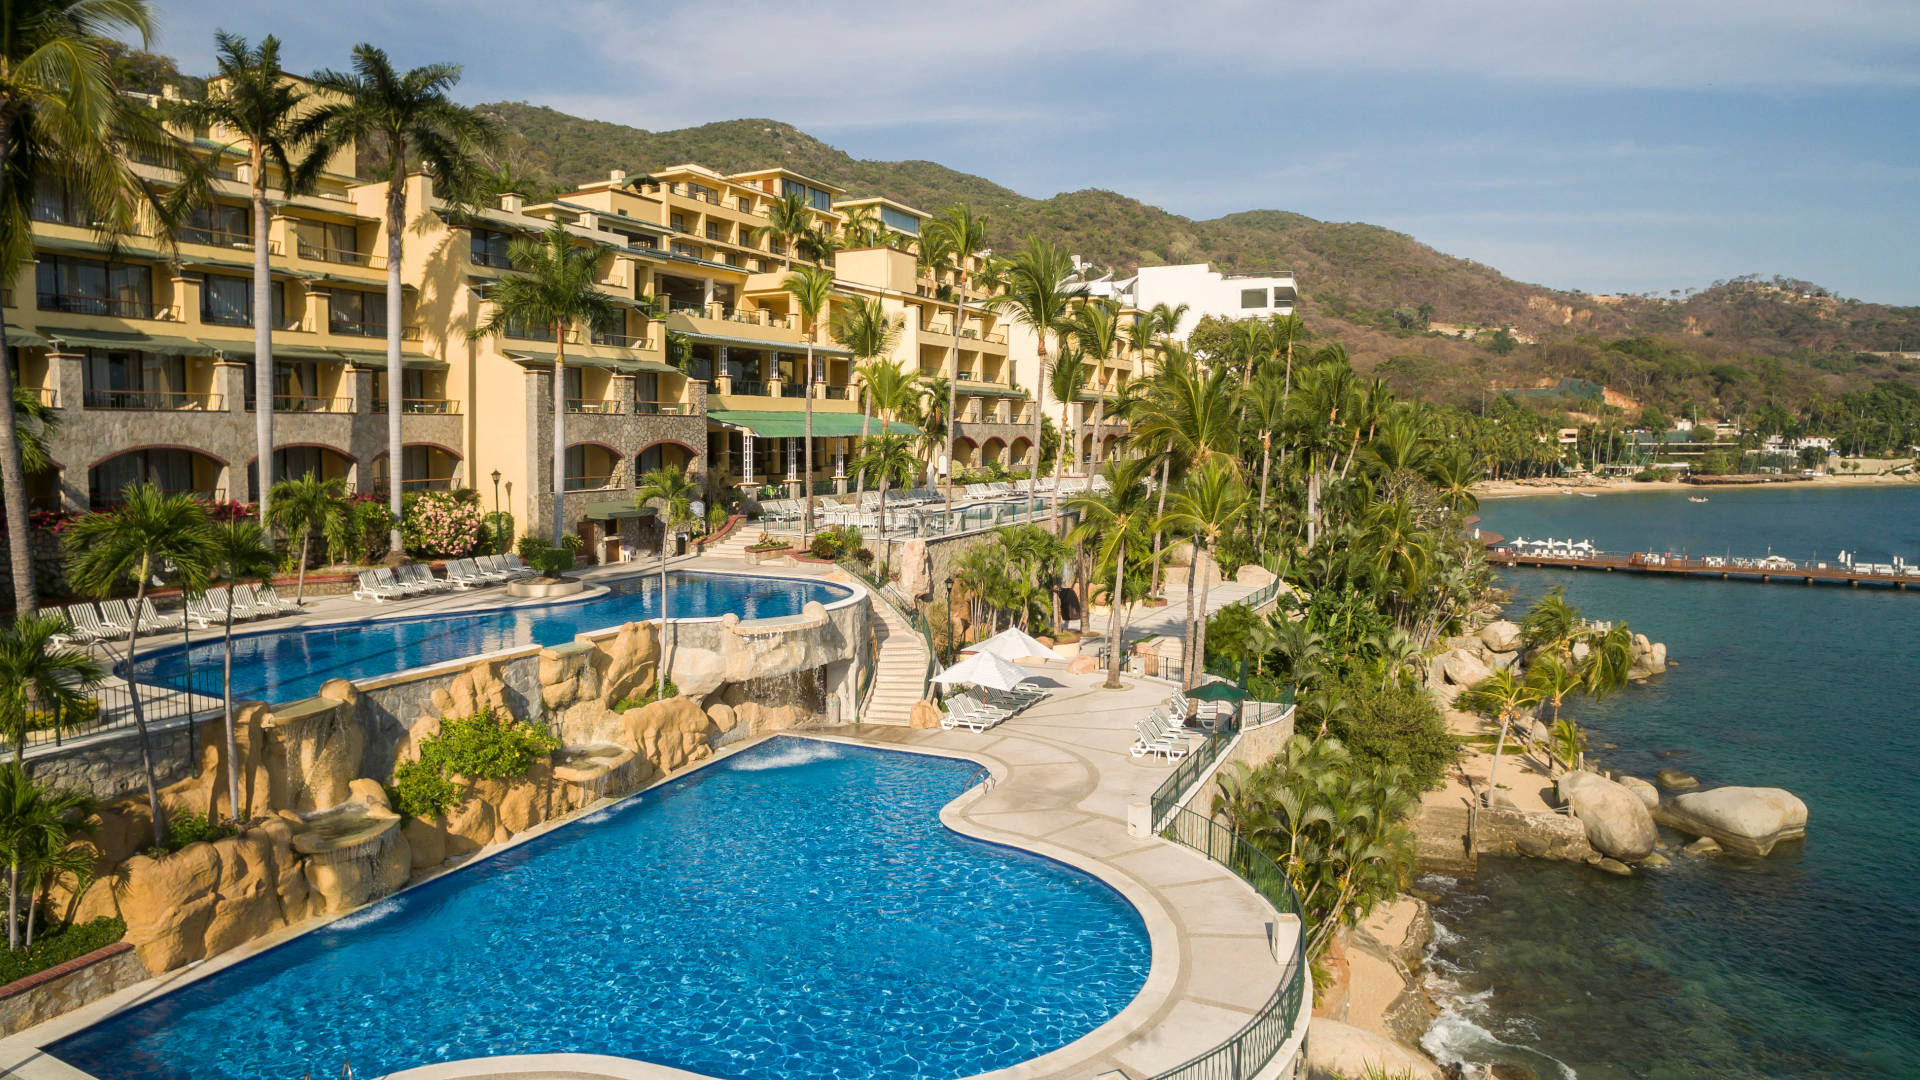 Camino Real Acapulco Diamante - best hotels in acapulco mexico